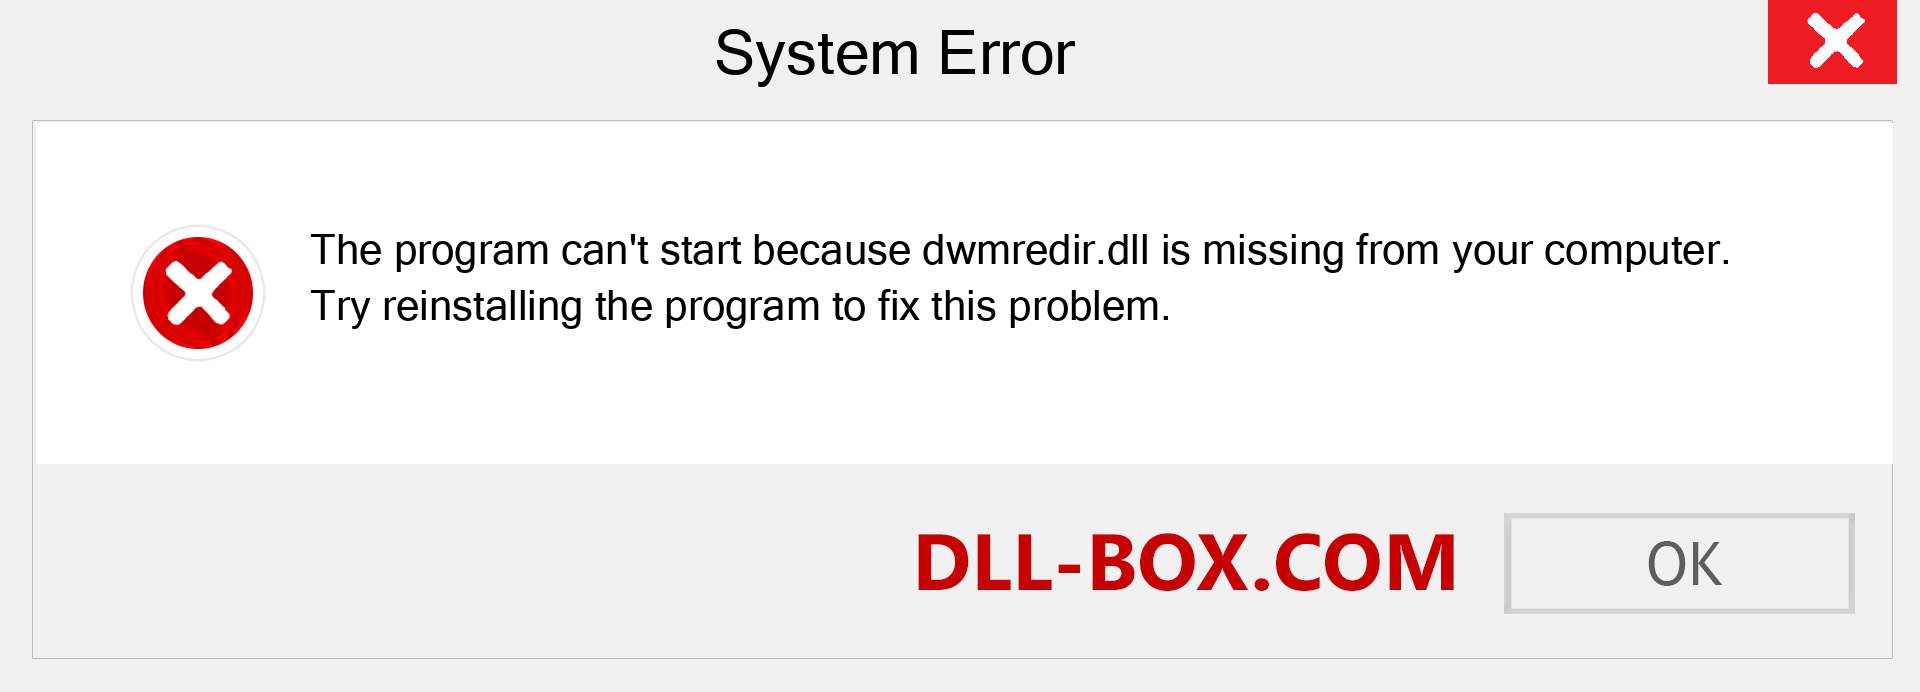  dwmredir.dll file is missing?. Download for Windows 7, 8, 10 - Fix  dwmredir dll Missing Error on Windows, photos, images